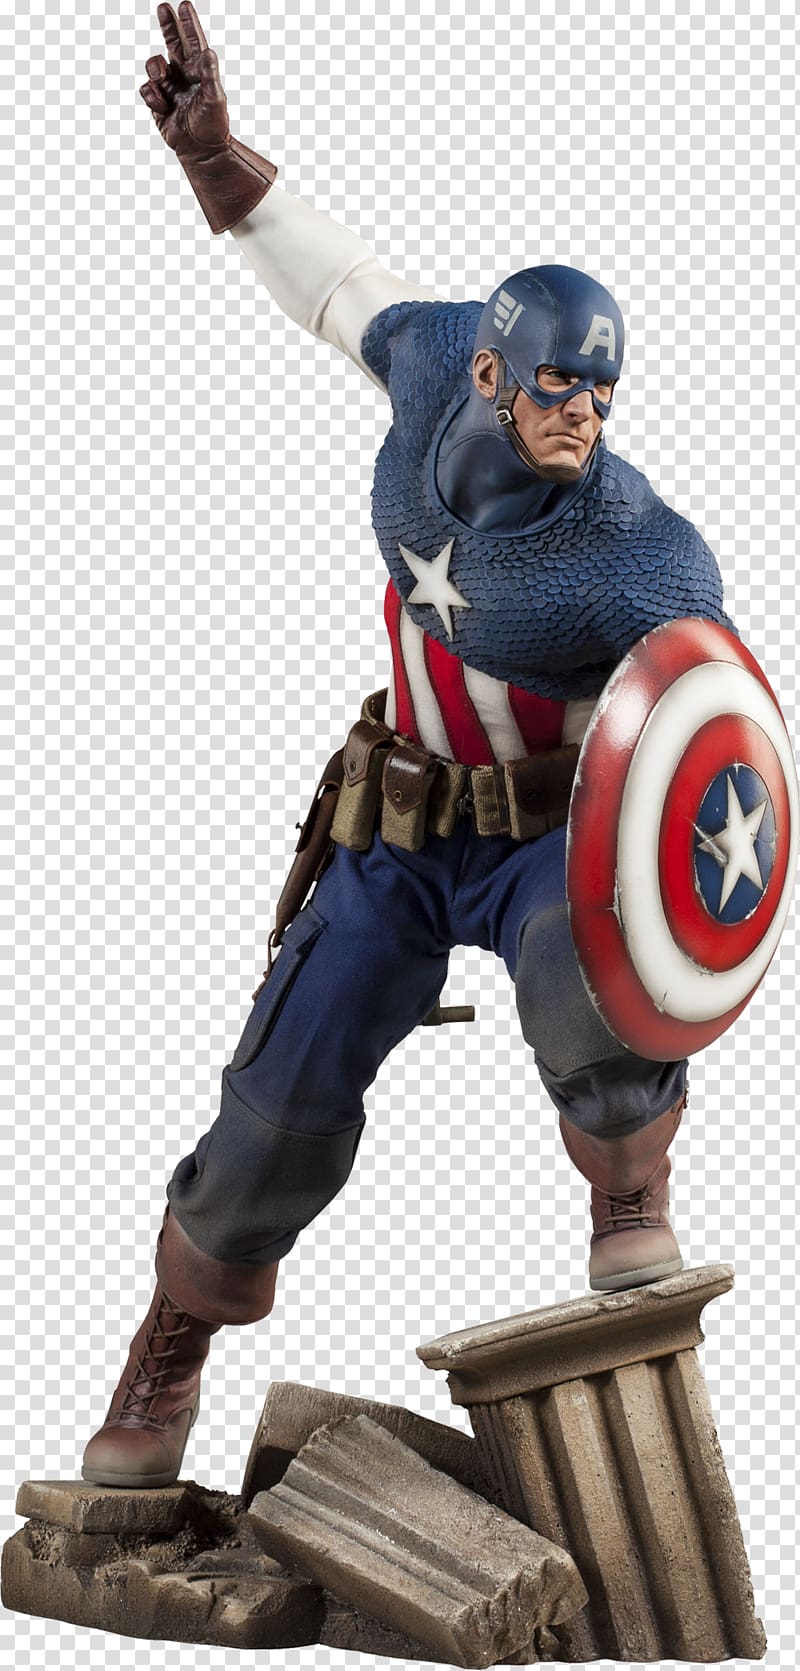 Captain America Hulk Sideshow Collectibles Marvel Comics Model figure, captain america transparent background PNG clipart